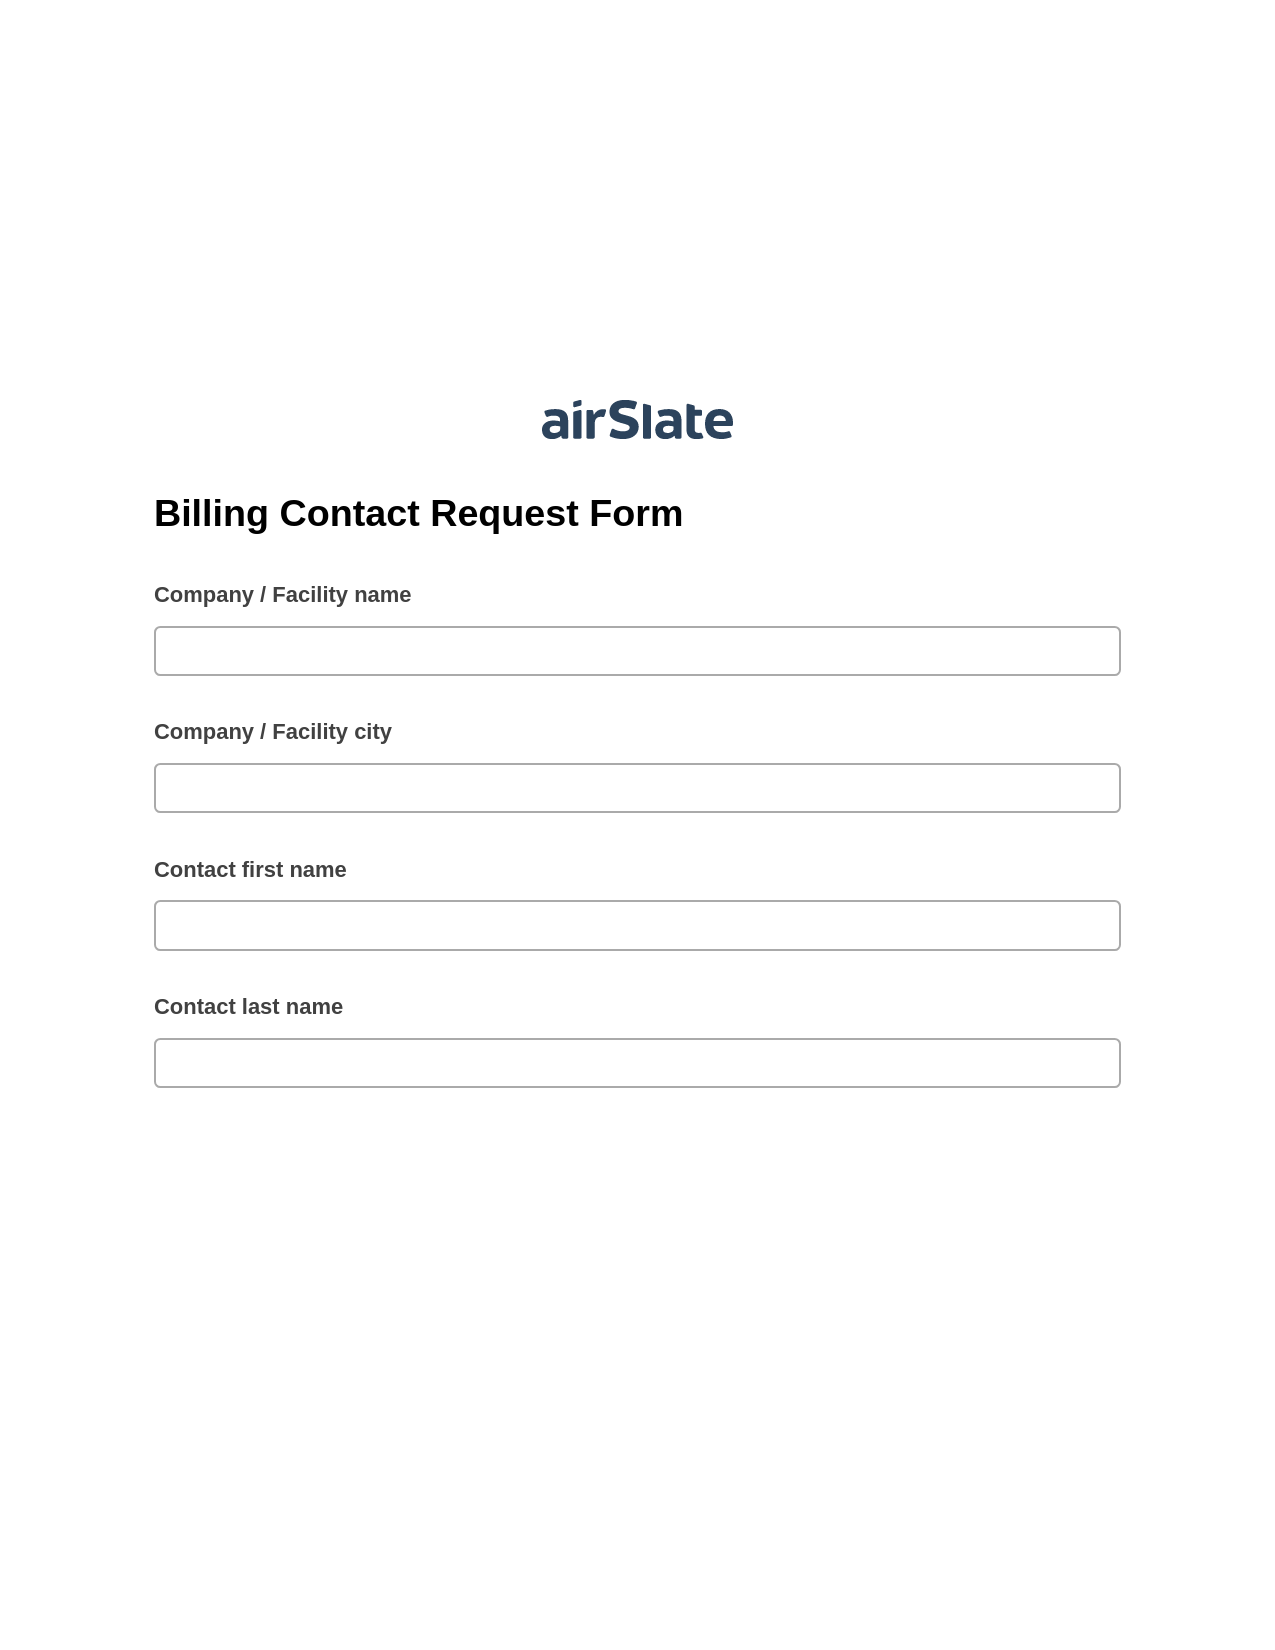 Multirole Billing Contact Request Form Pre-fill Slate from MS Dynamics 365 Records Bot, Google Calendar Bot, Slack Notification Postfinish Bot